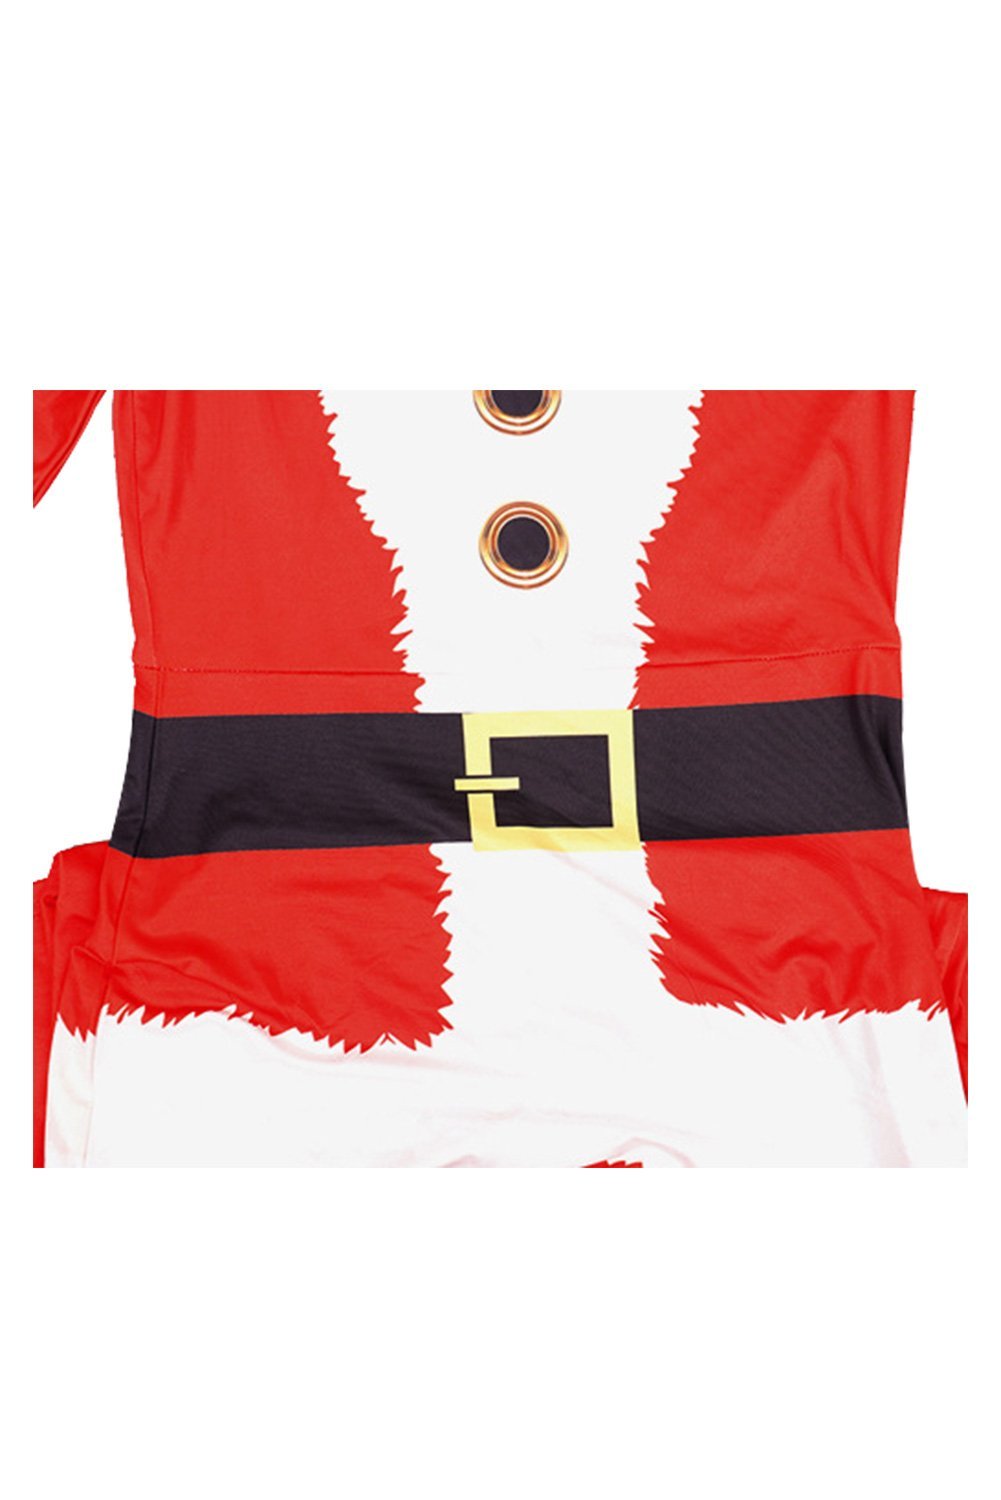 Christmas Party Long Dress  Women Santa Claus Costume